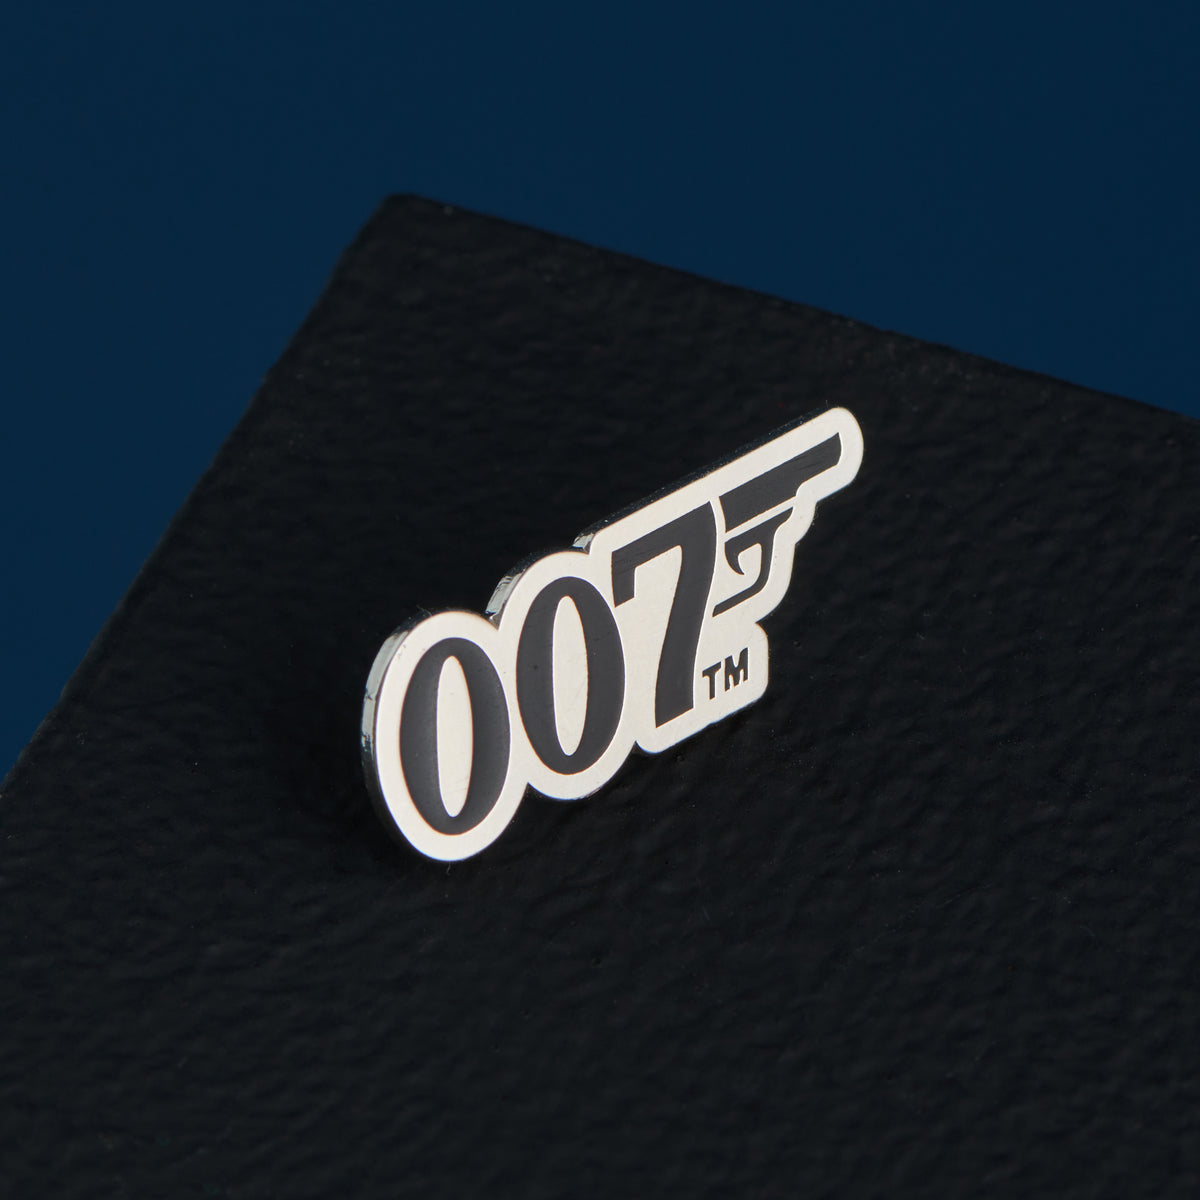 James Bond 007 Pin Badge